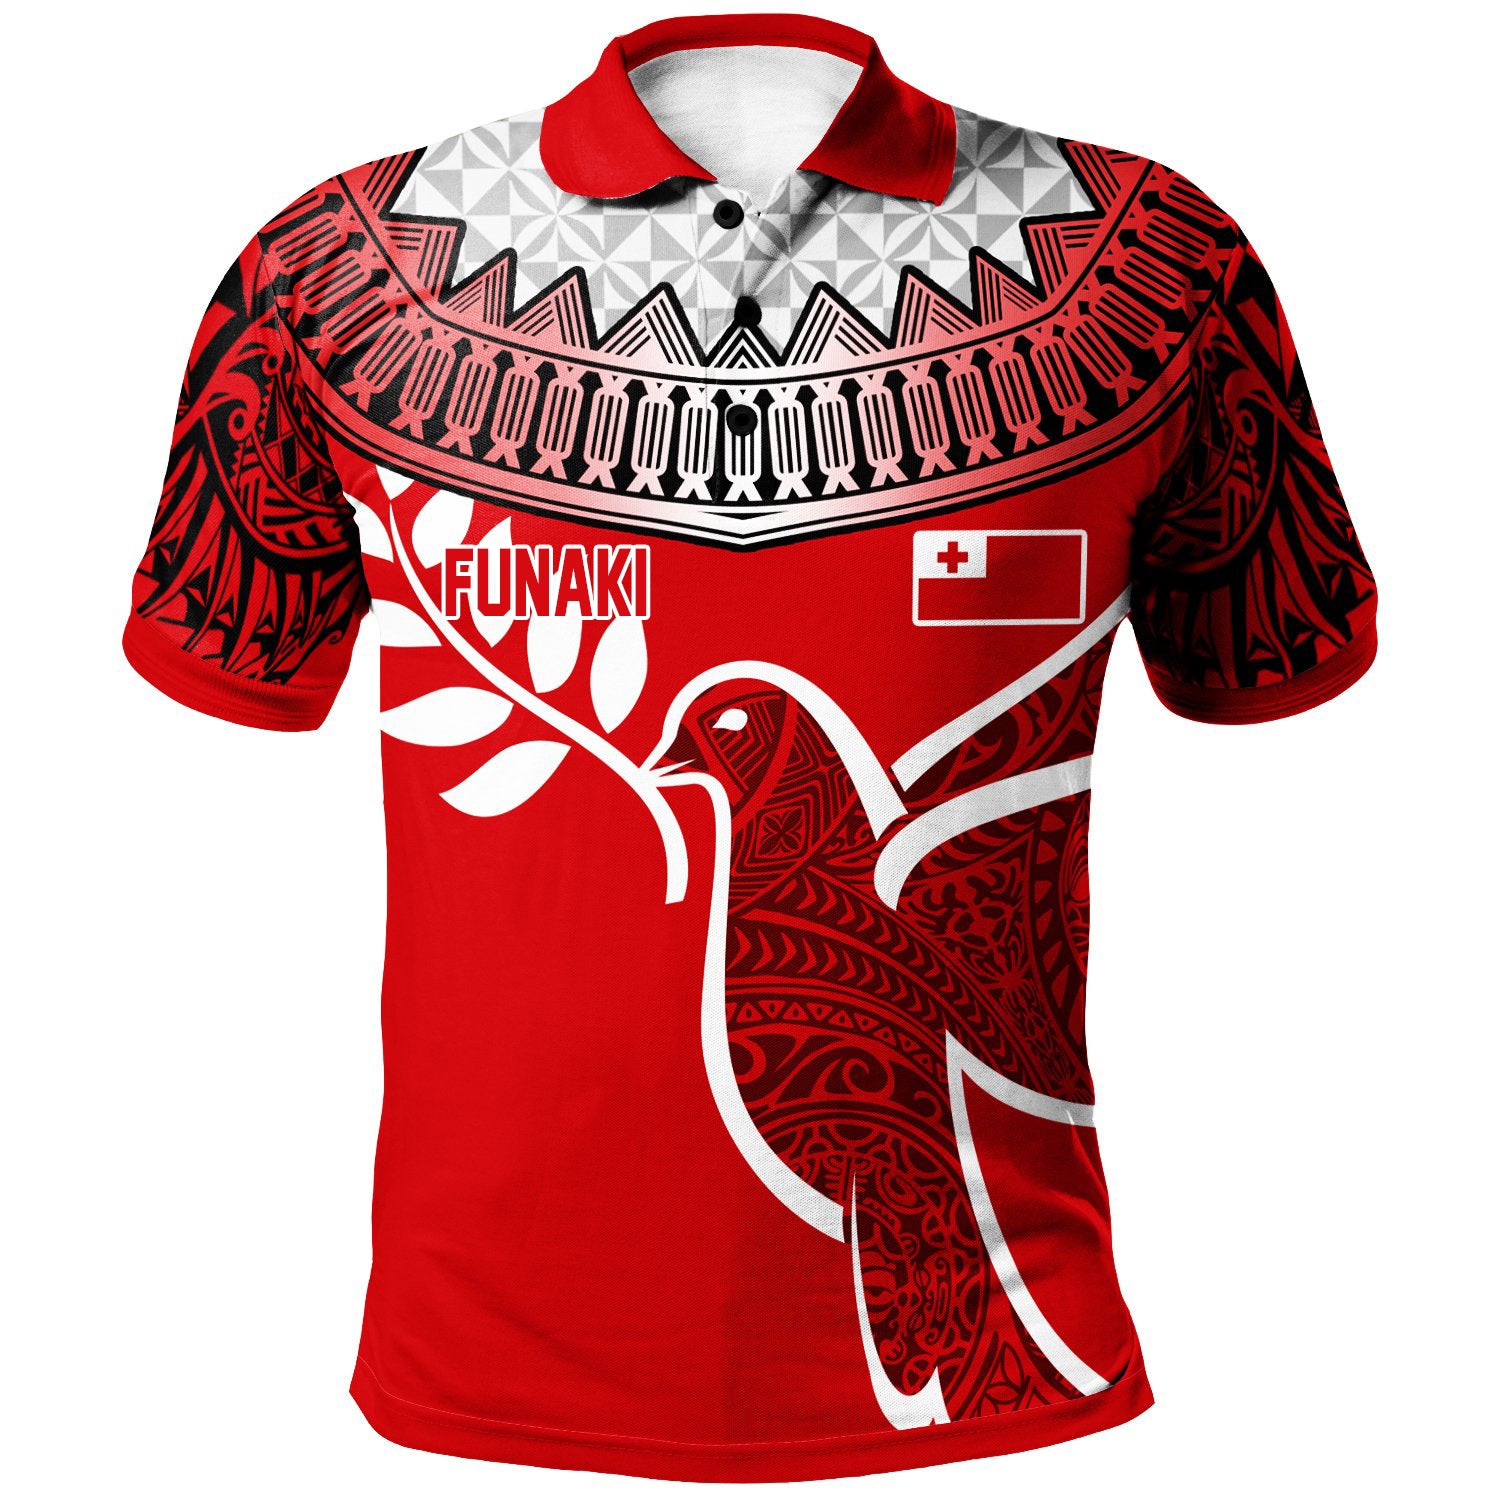 (FUNAKI) Tonga Custom Polo Shirt Tonga Sport RLT7 Unisex Red - Polynesian Pride